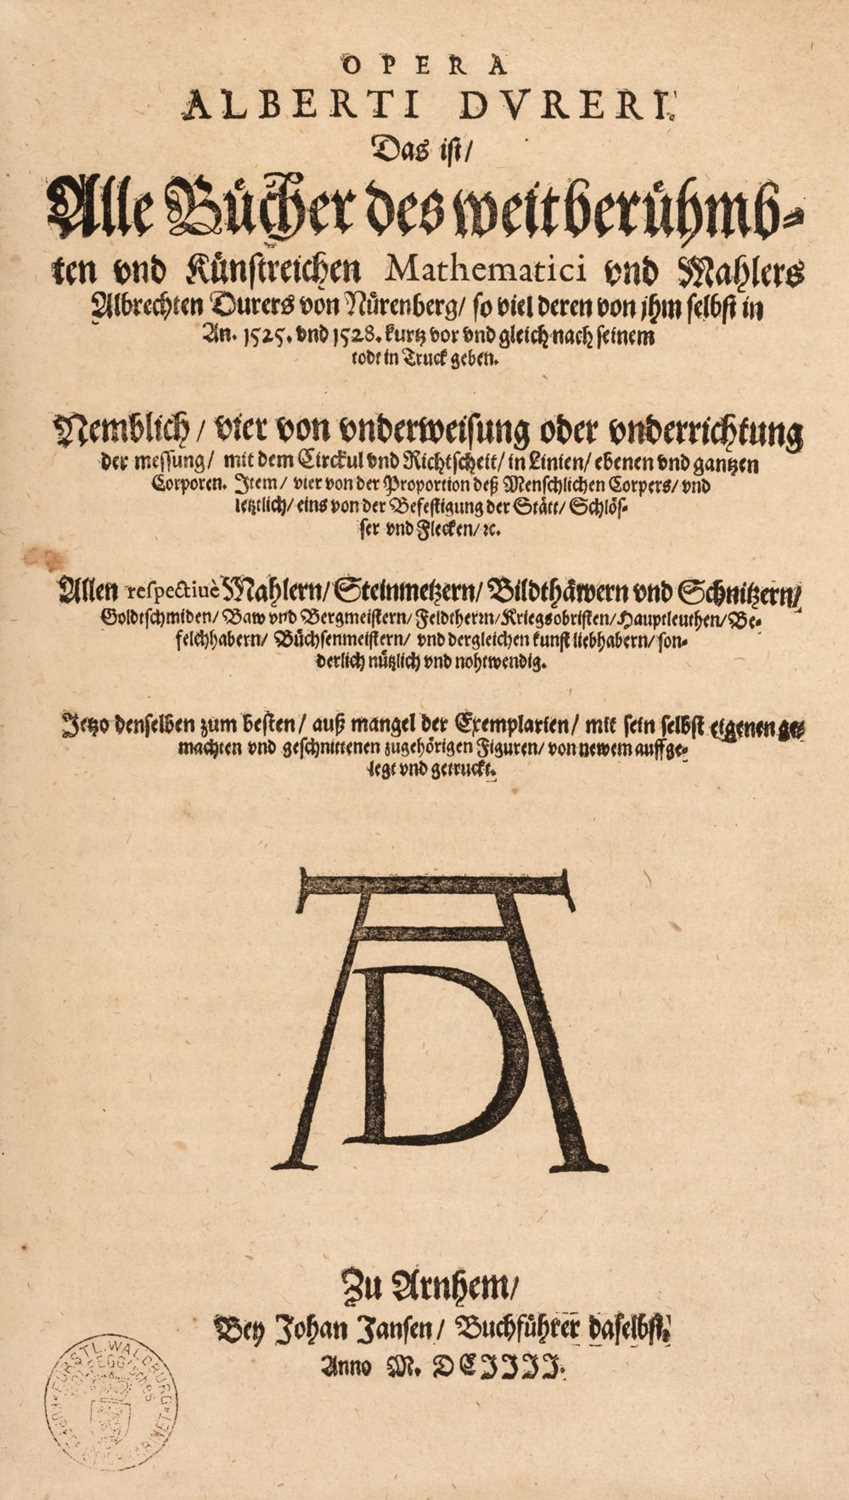 39 - Dürer (Albrecht). Opera Alberti Dureri, Arnhem: bey Johan Jansen, 1604